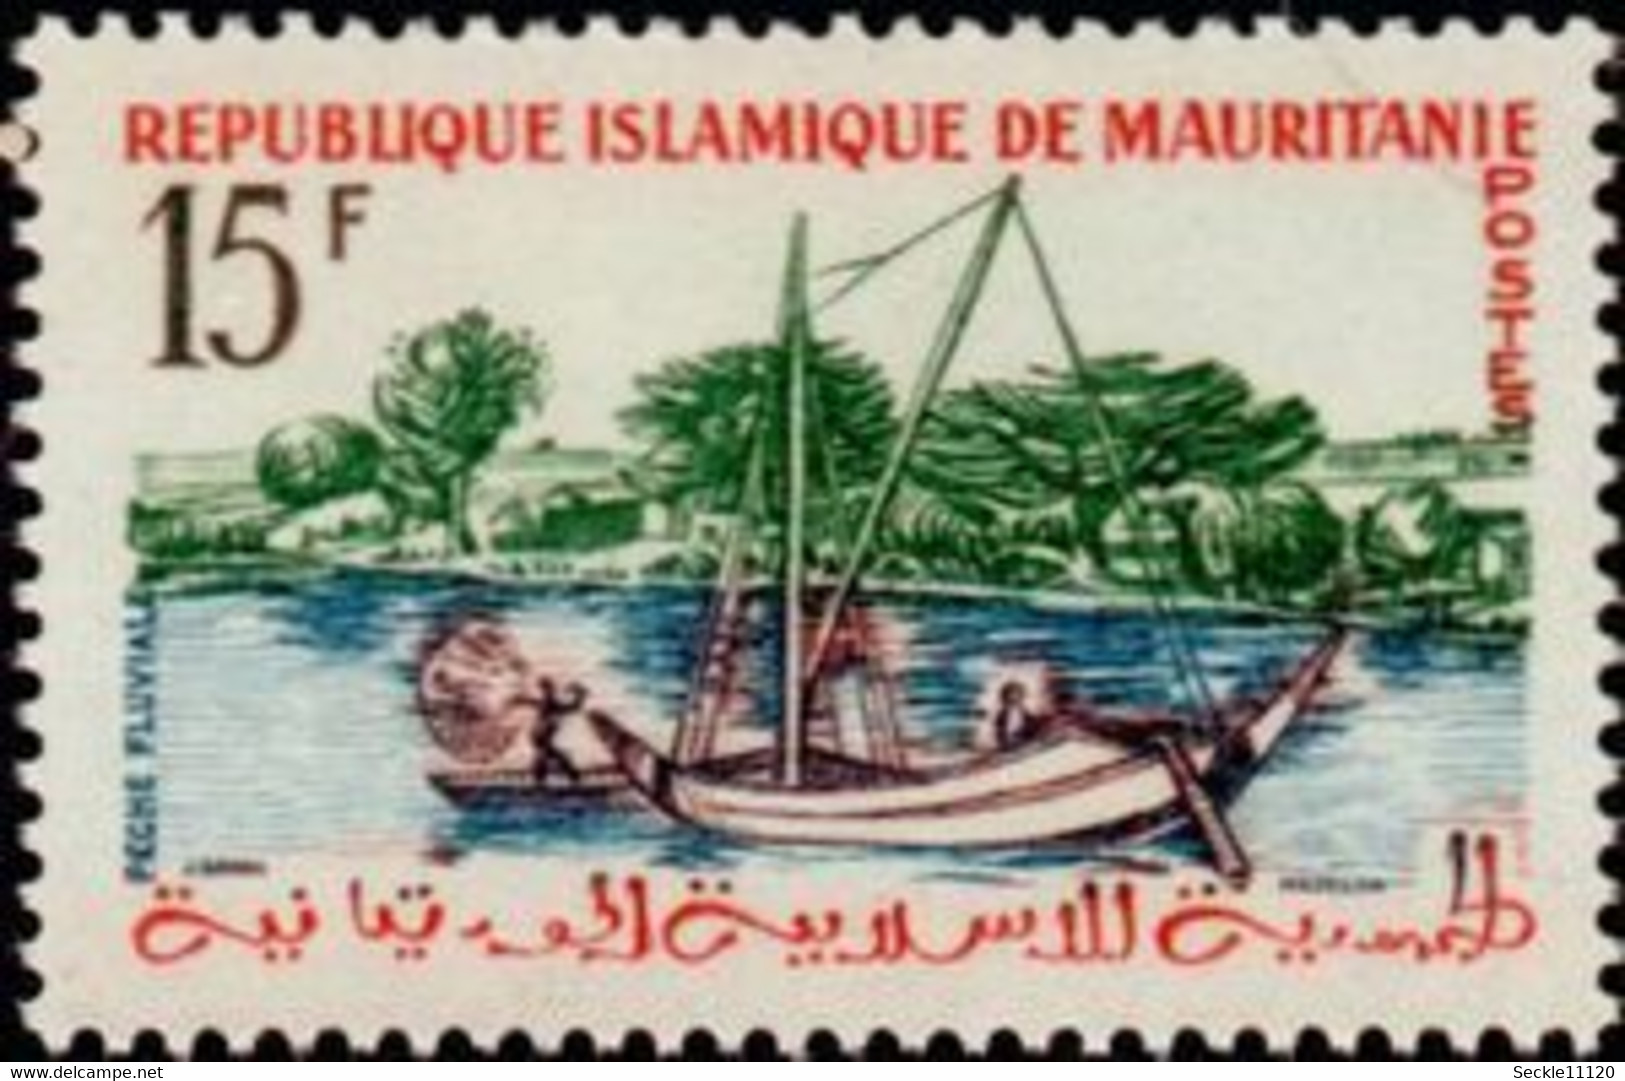 Mauritanie Mauritania - 1960 - 138 / 154 - Lot MNH